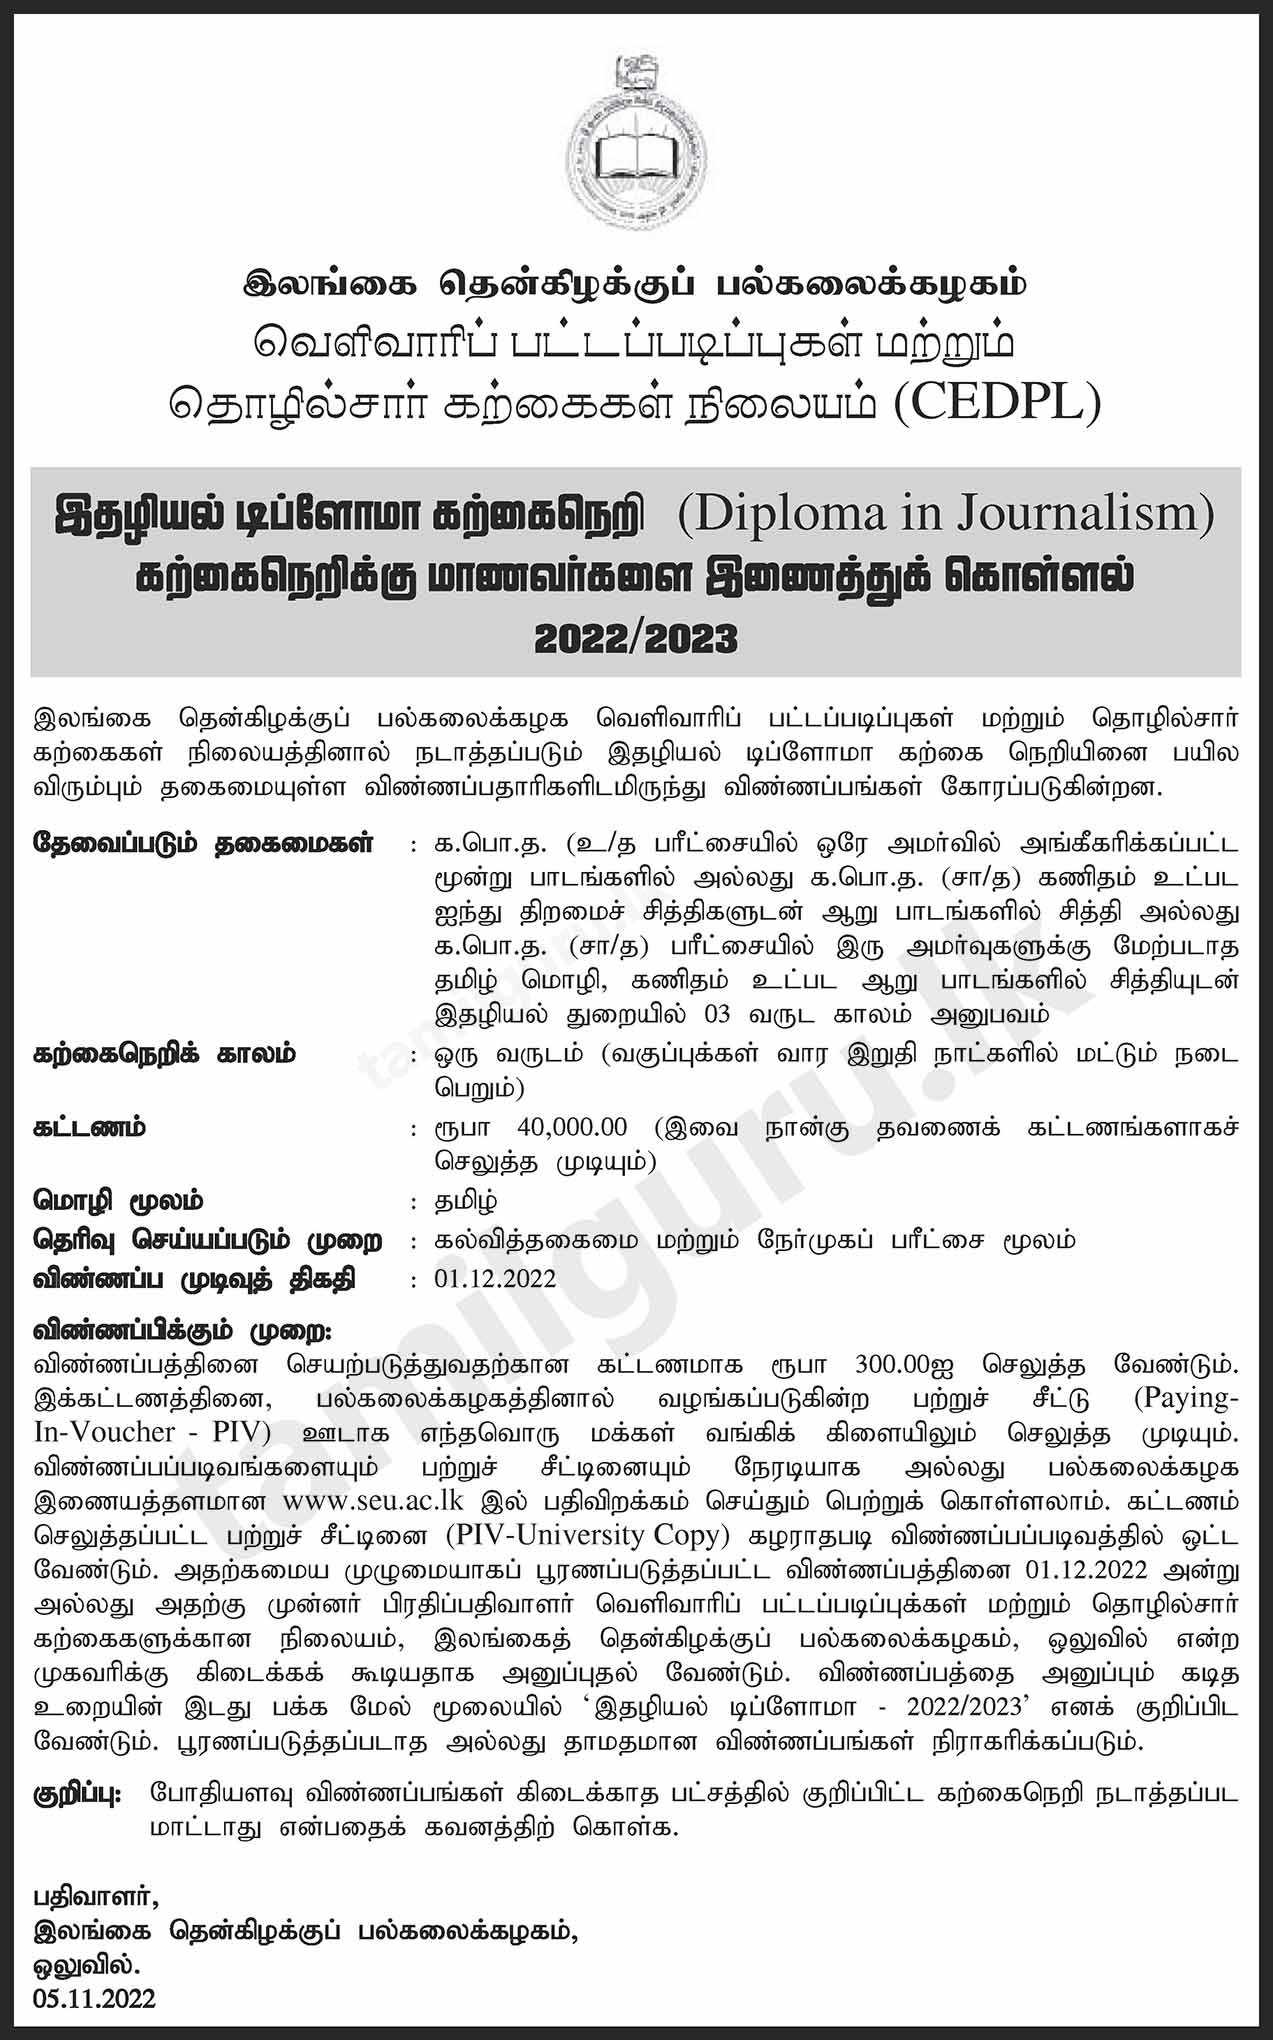 Calling Applications for Diploma in Journalism (2022/2023) - South Eastern University of Sri Lanka (SEUSL)